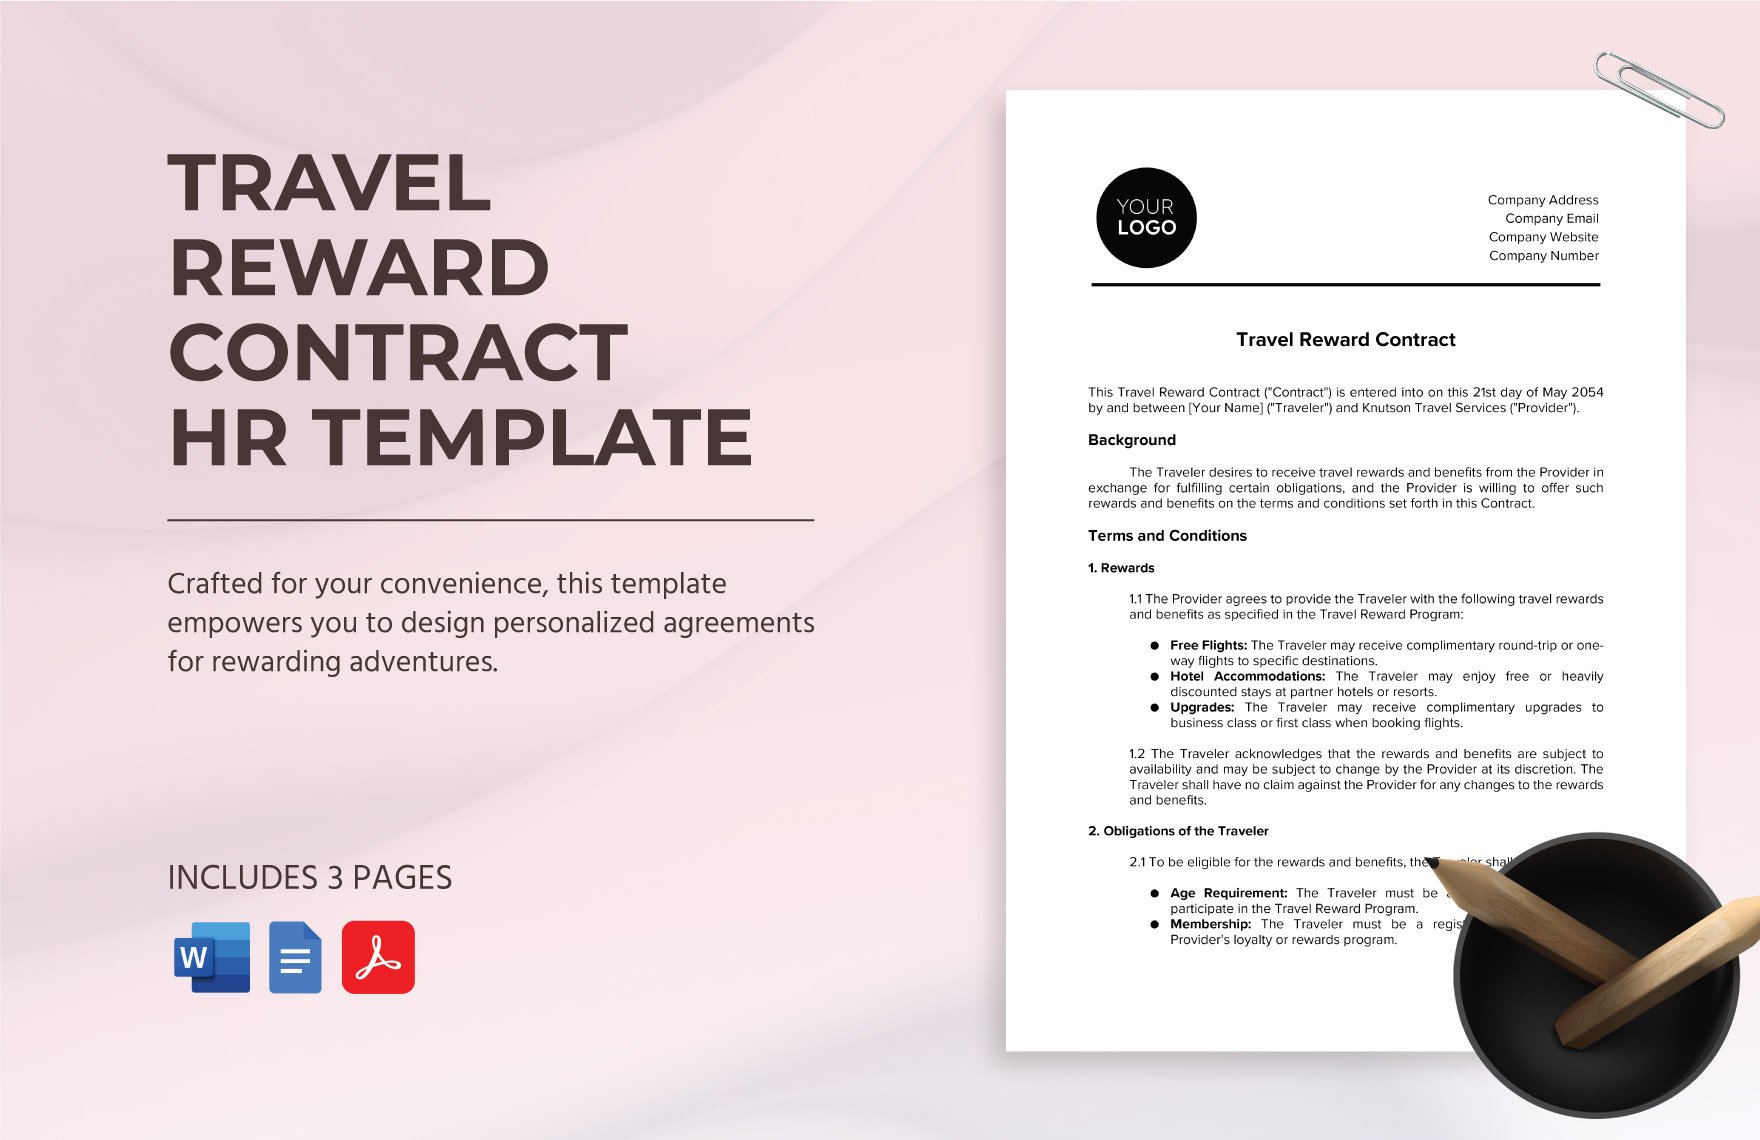 Travel Reward Contract HR Template